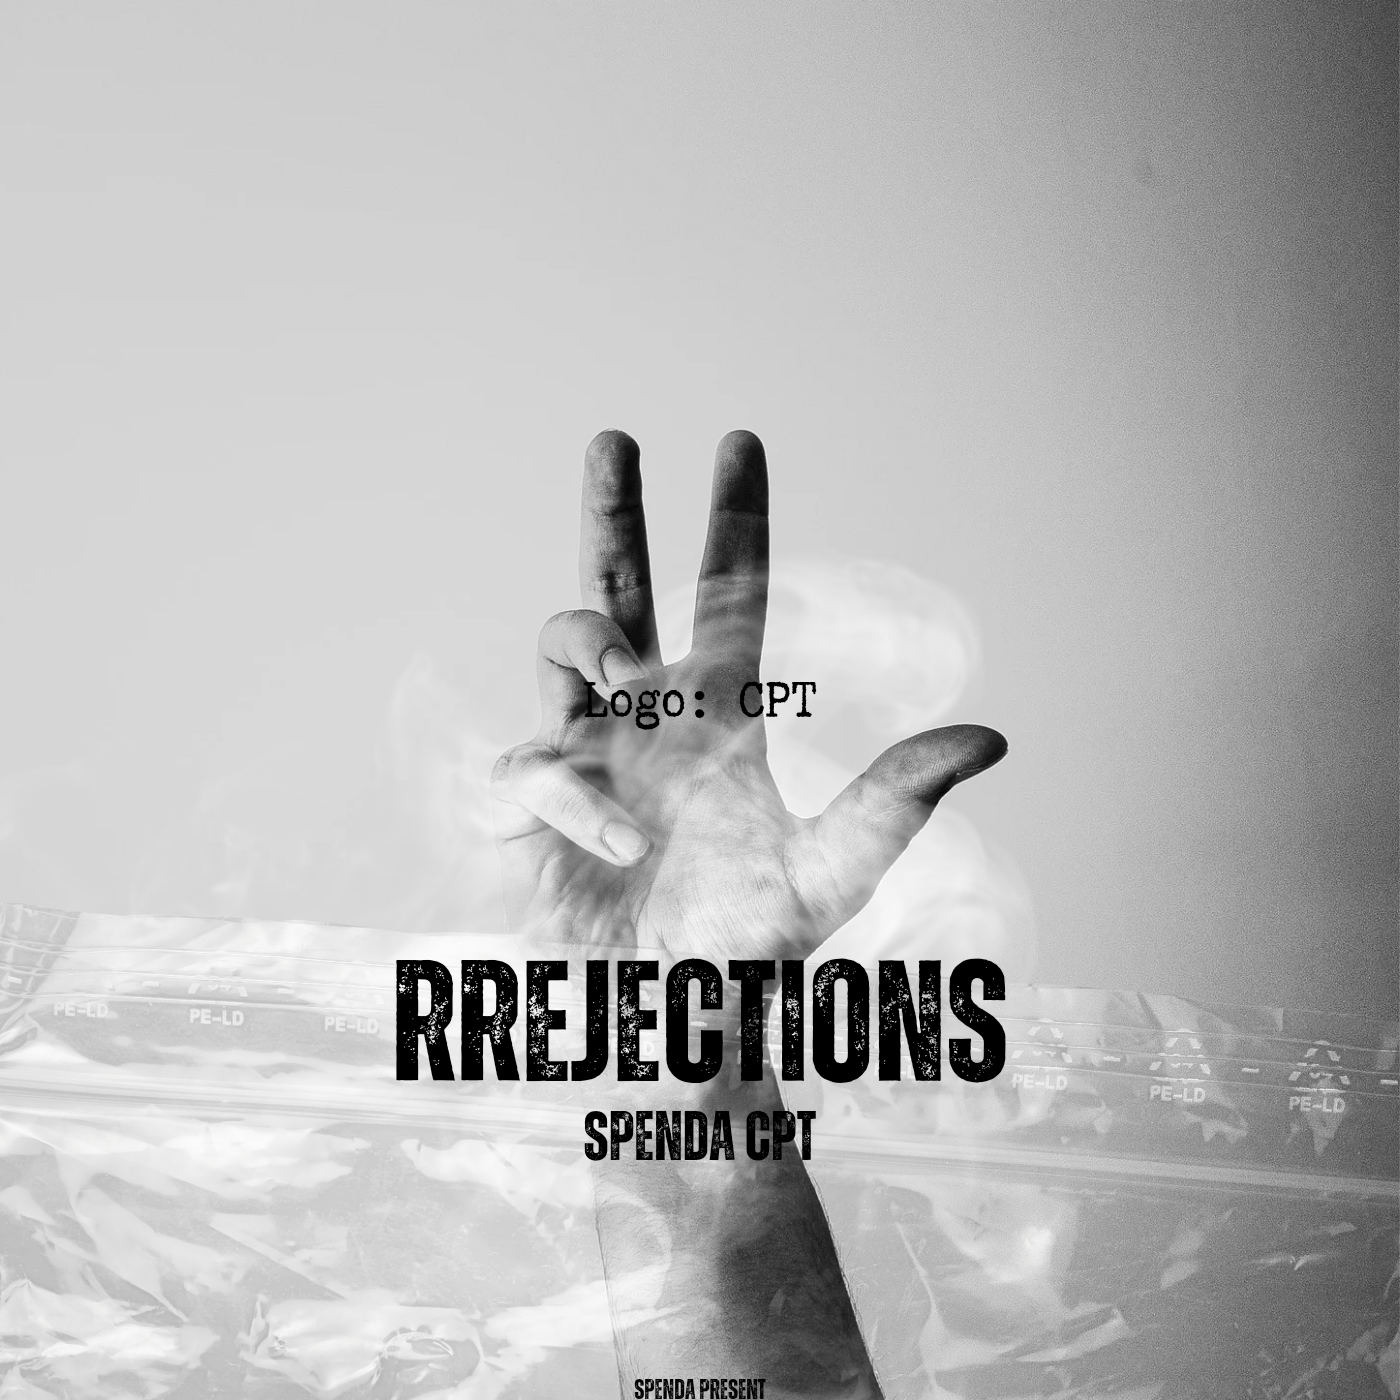 Rejections - Spenda CPT